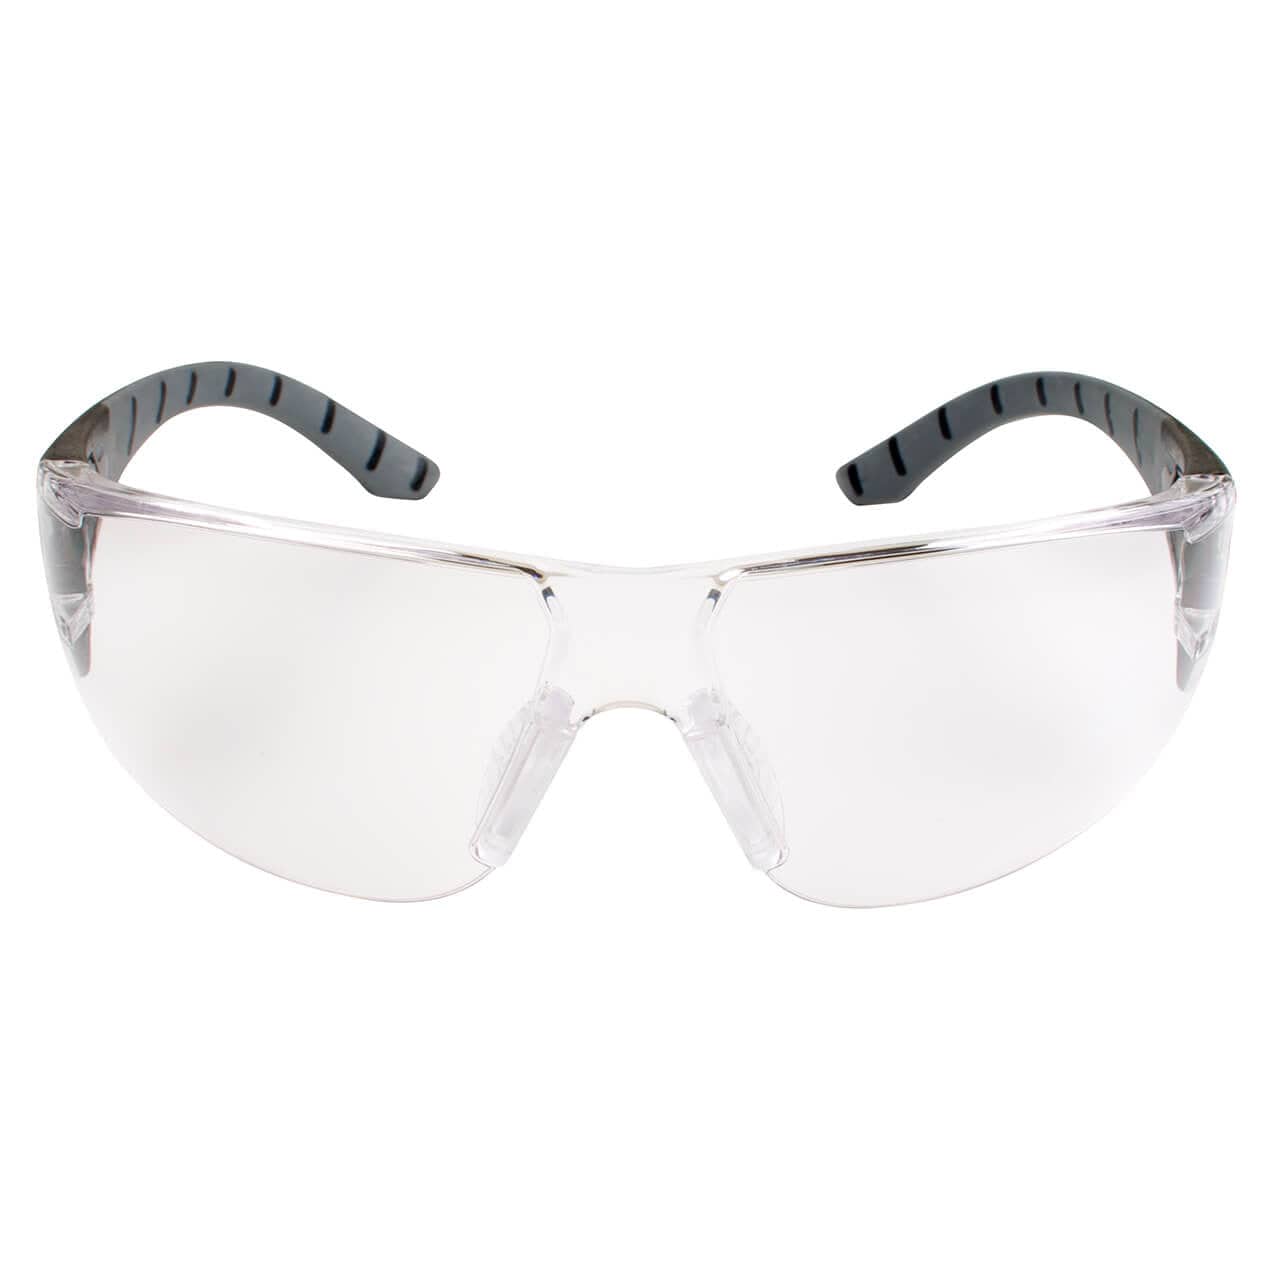 METEL M50 Safety Glasses Lightweight, Flexible Temples, Soft Nose, Multiple Lens Options